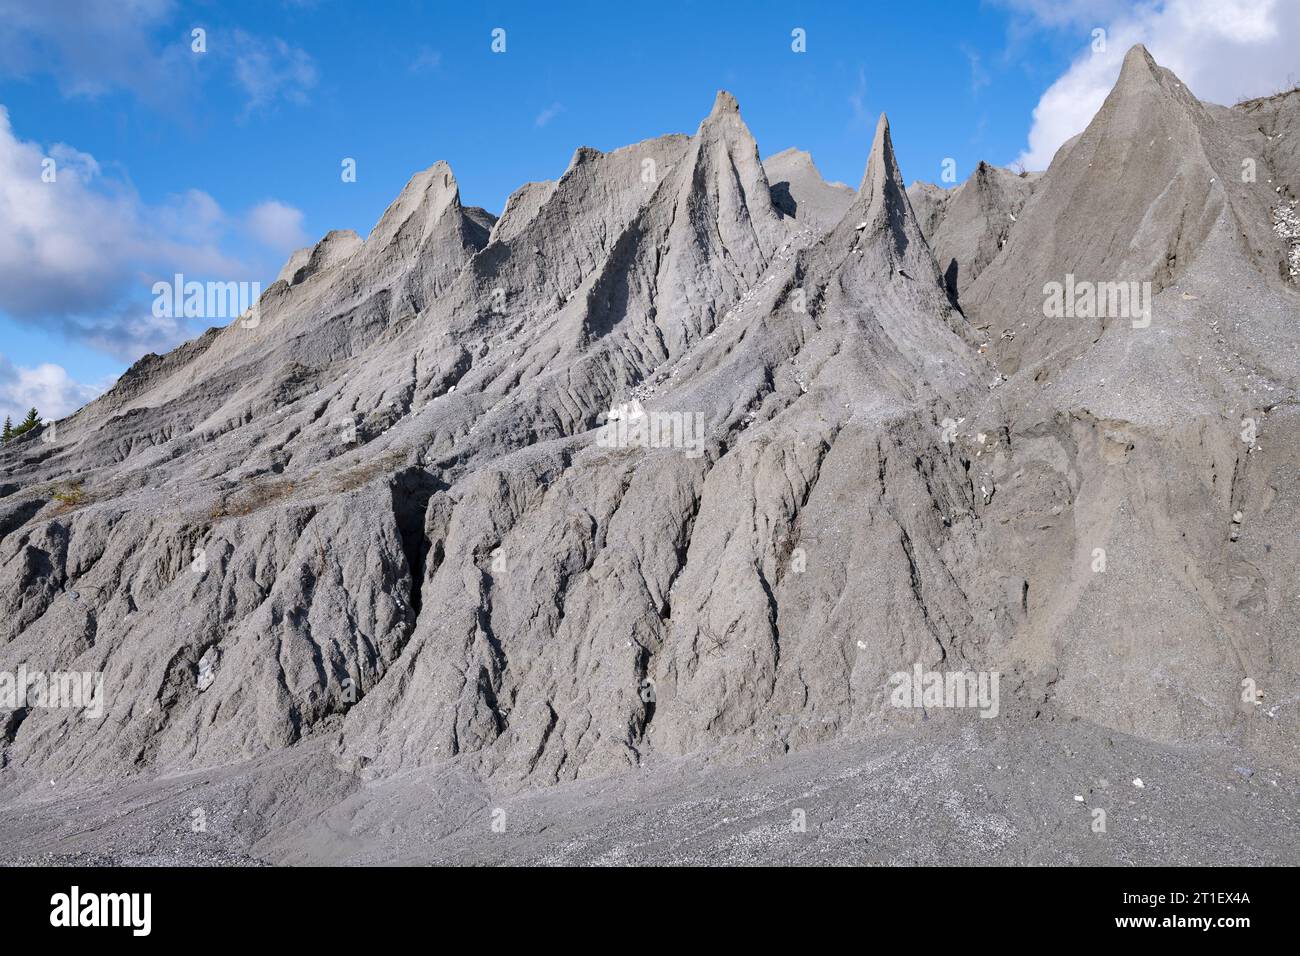 Bizarre Felsen aus Marmorsplittern - Abfall aus einer alten Kalksteinmarmorfabrik in Ruskeala. Karelien, Russland Stockfoto